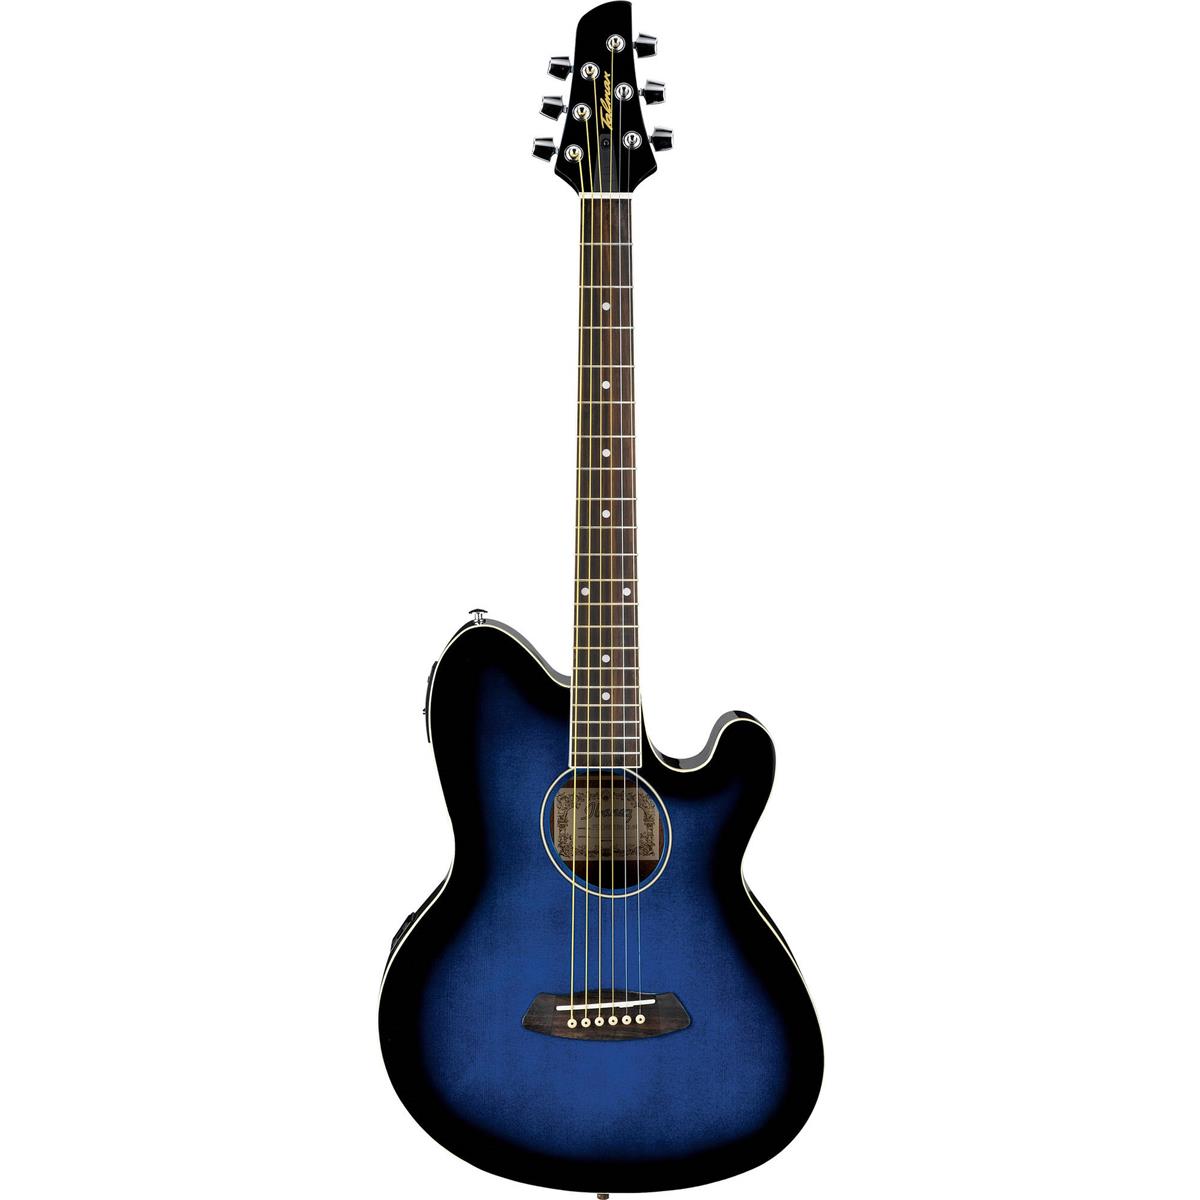 Ibanez Talman Series TCY10E Acoustic Electric Guitar $139 + free s/h